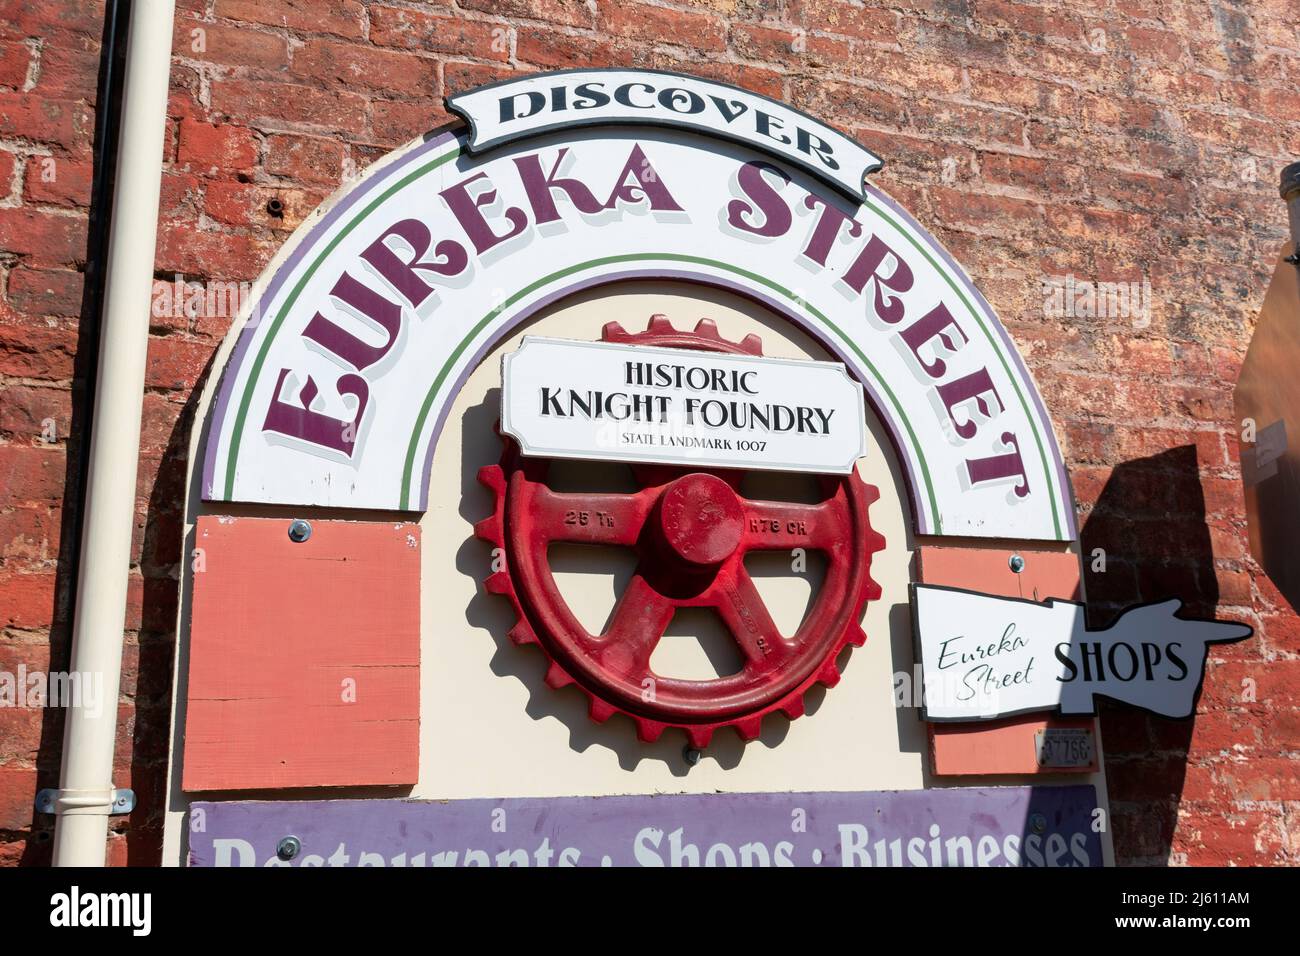 Eureka street sign advertises shop, restaurants and historic Knight Foundry museum. - Sutter Creek, California, USA - 2022 Stock Photo